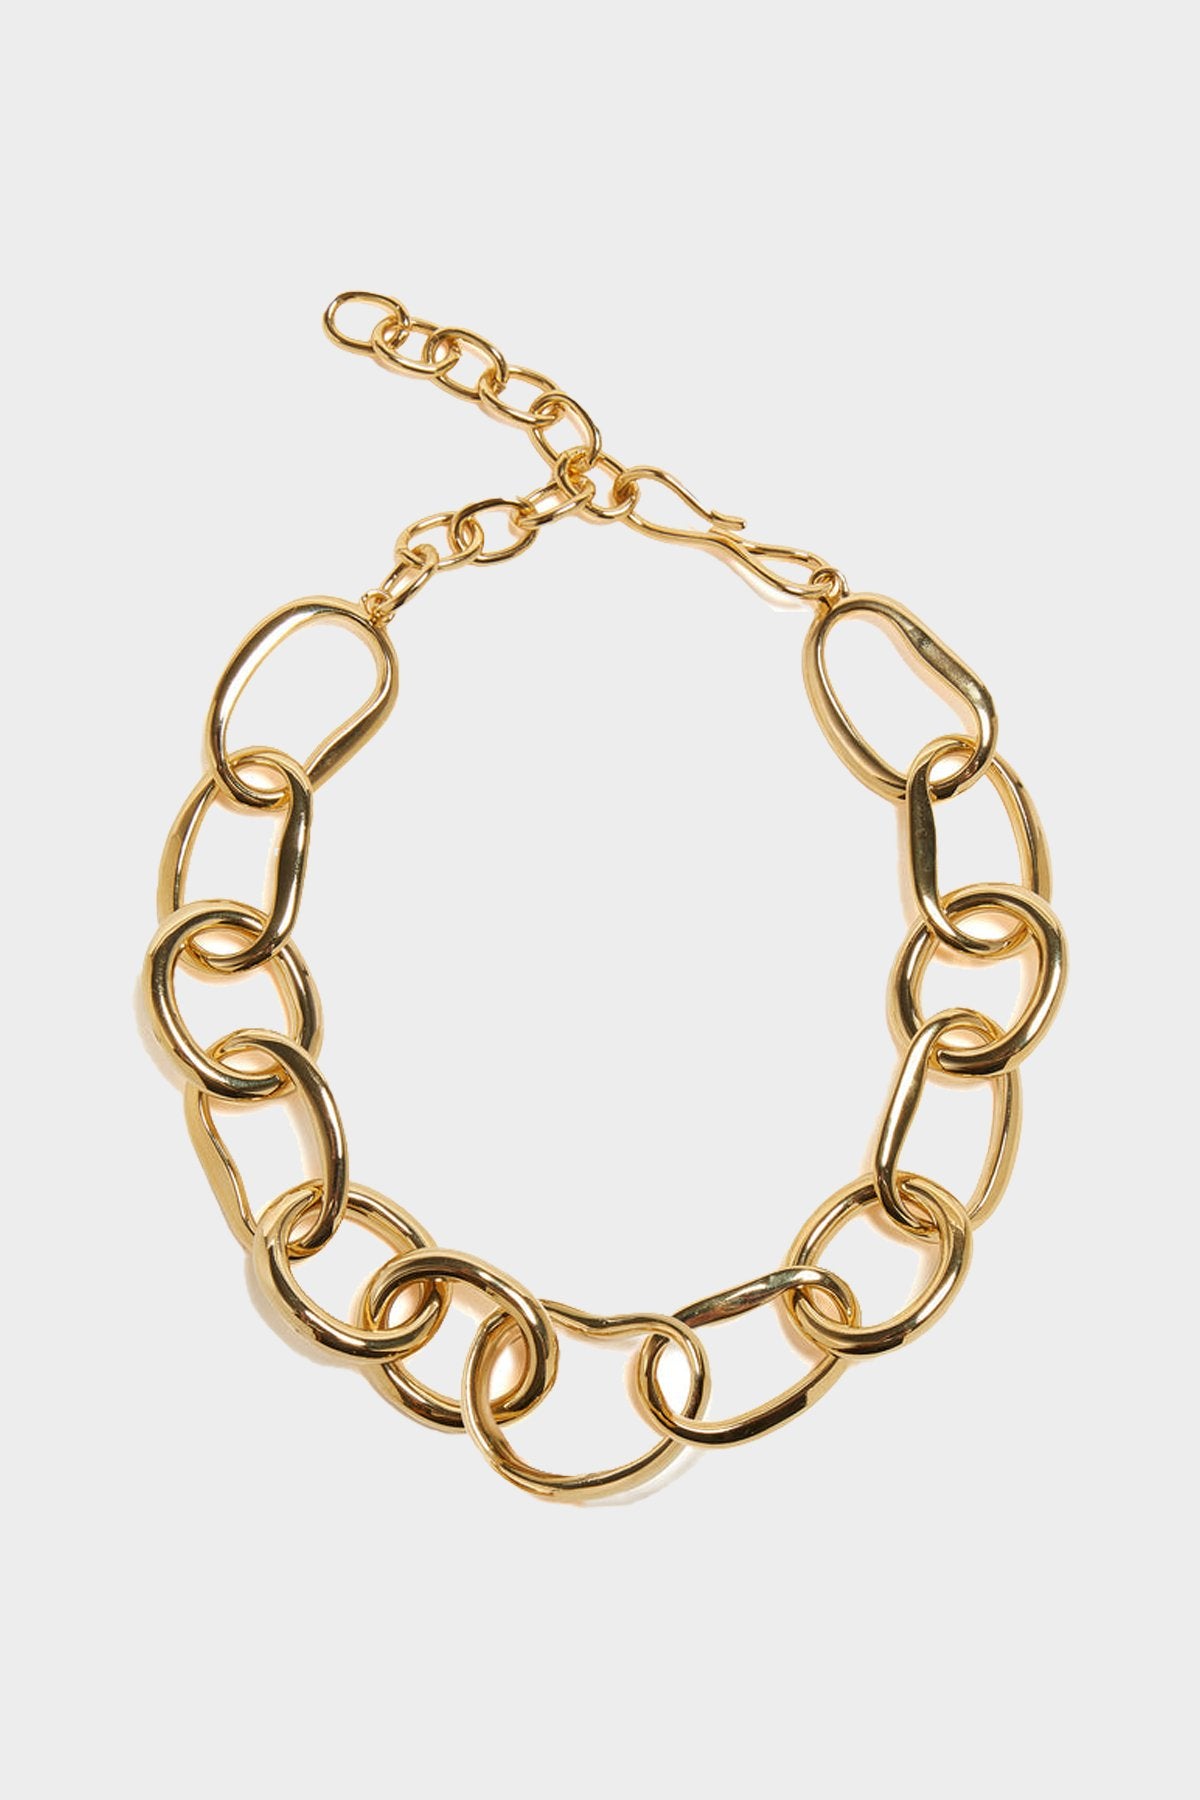 Porto Chain Necklace - shop-olivia.com